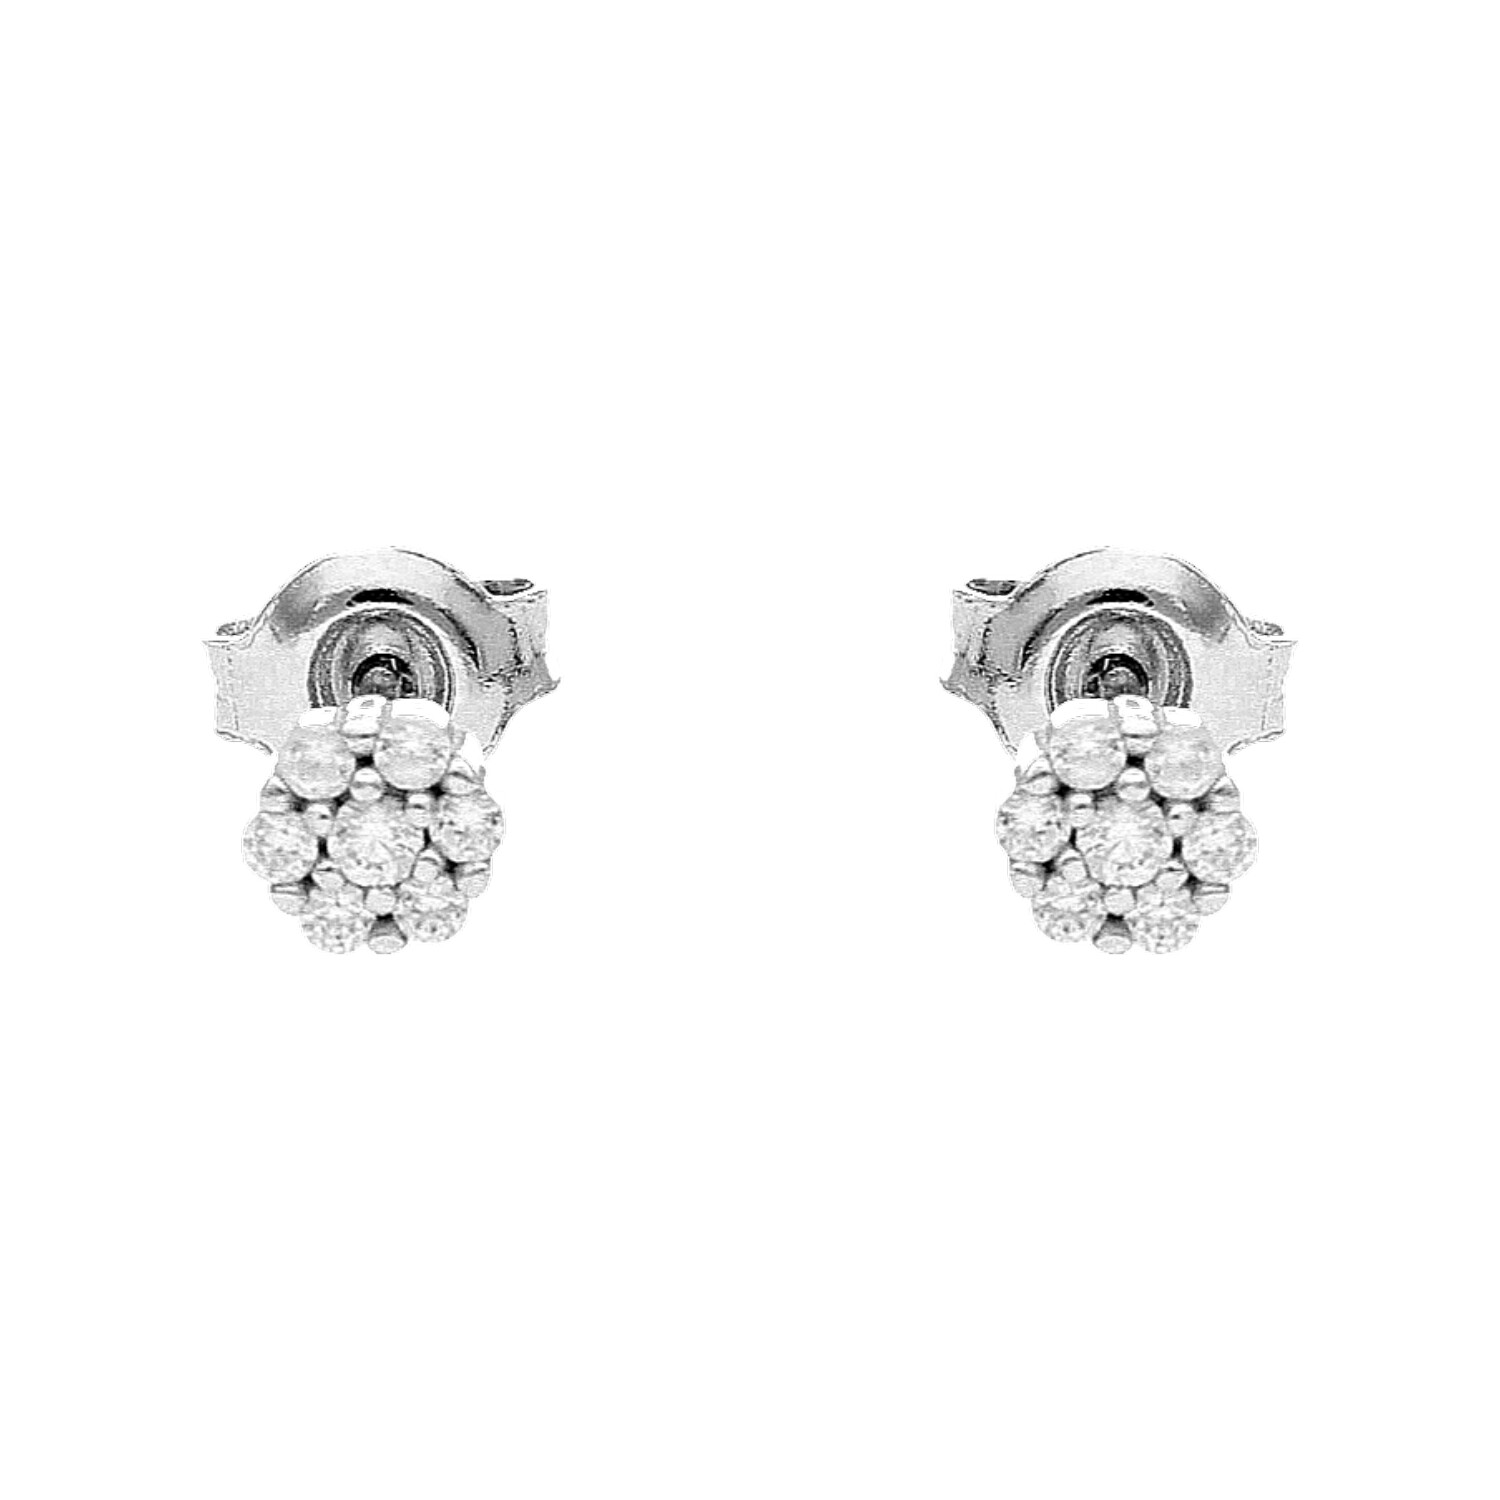 White gold flower earrings with zircons